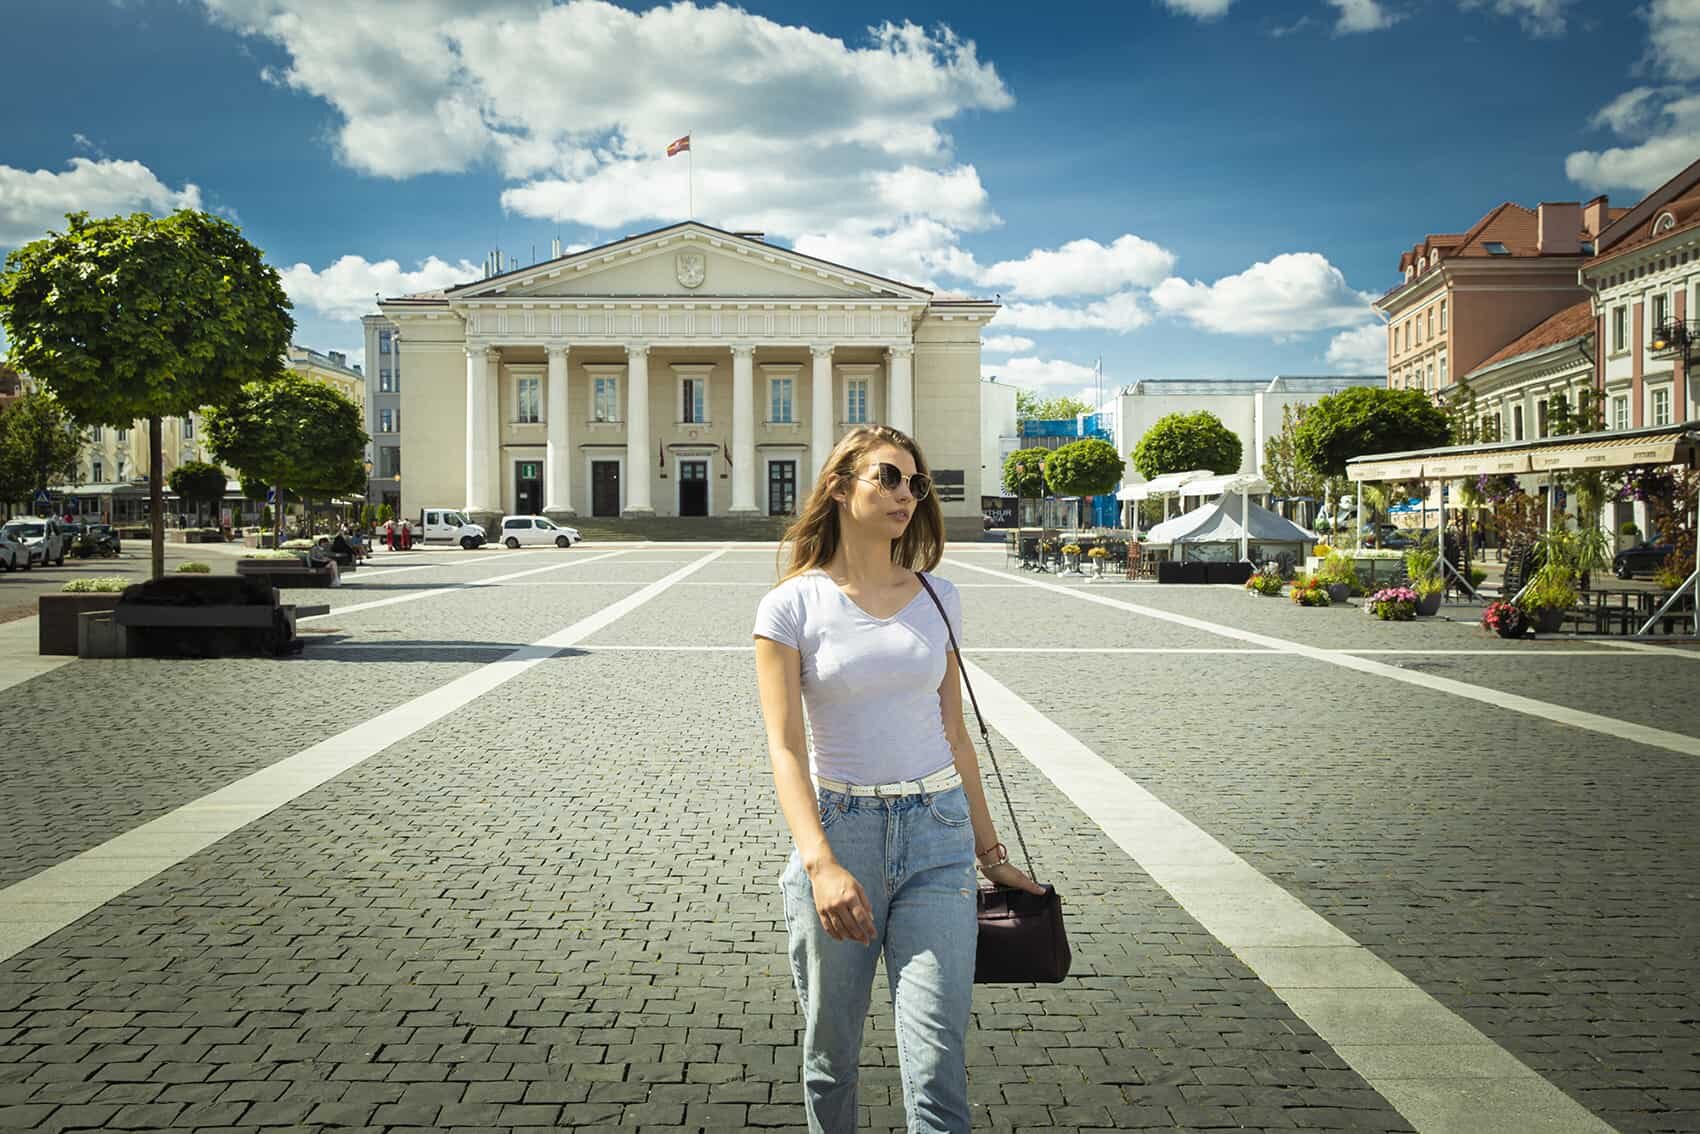 Explore Vilnius with a fun photoshoot